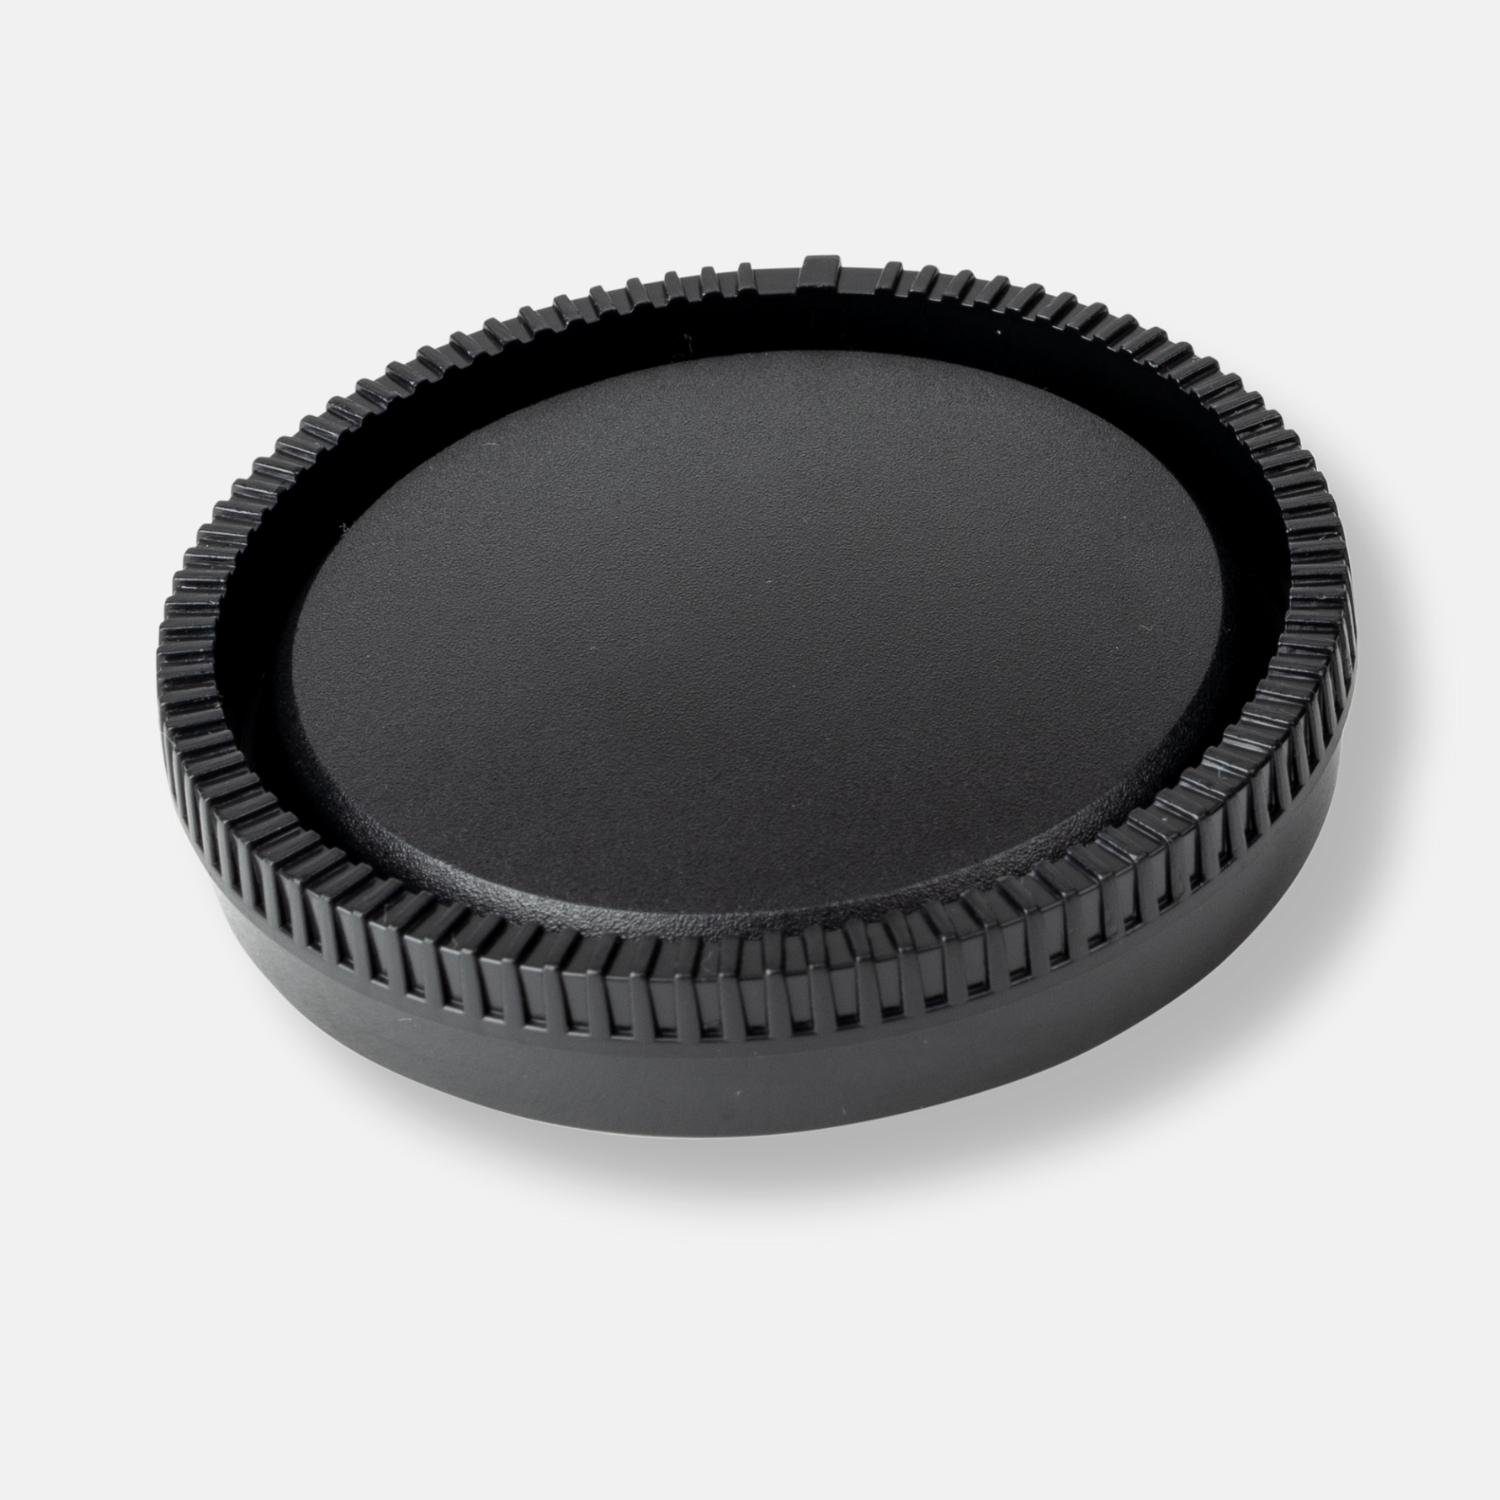 Super Schnäppchenkauf! Lens-Aid Objektivrückdeckel Objektivrückdeckel für Sony E-Mount